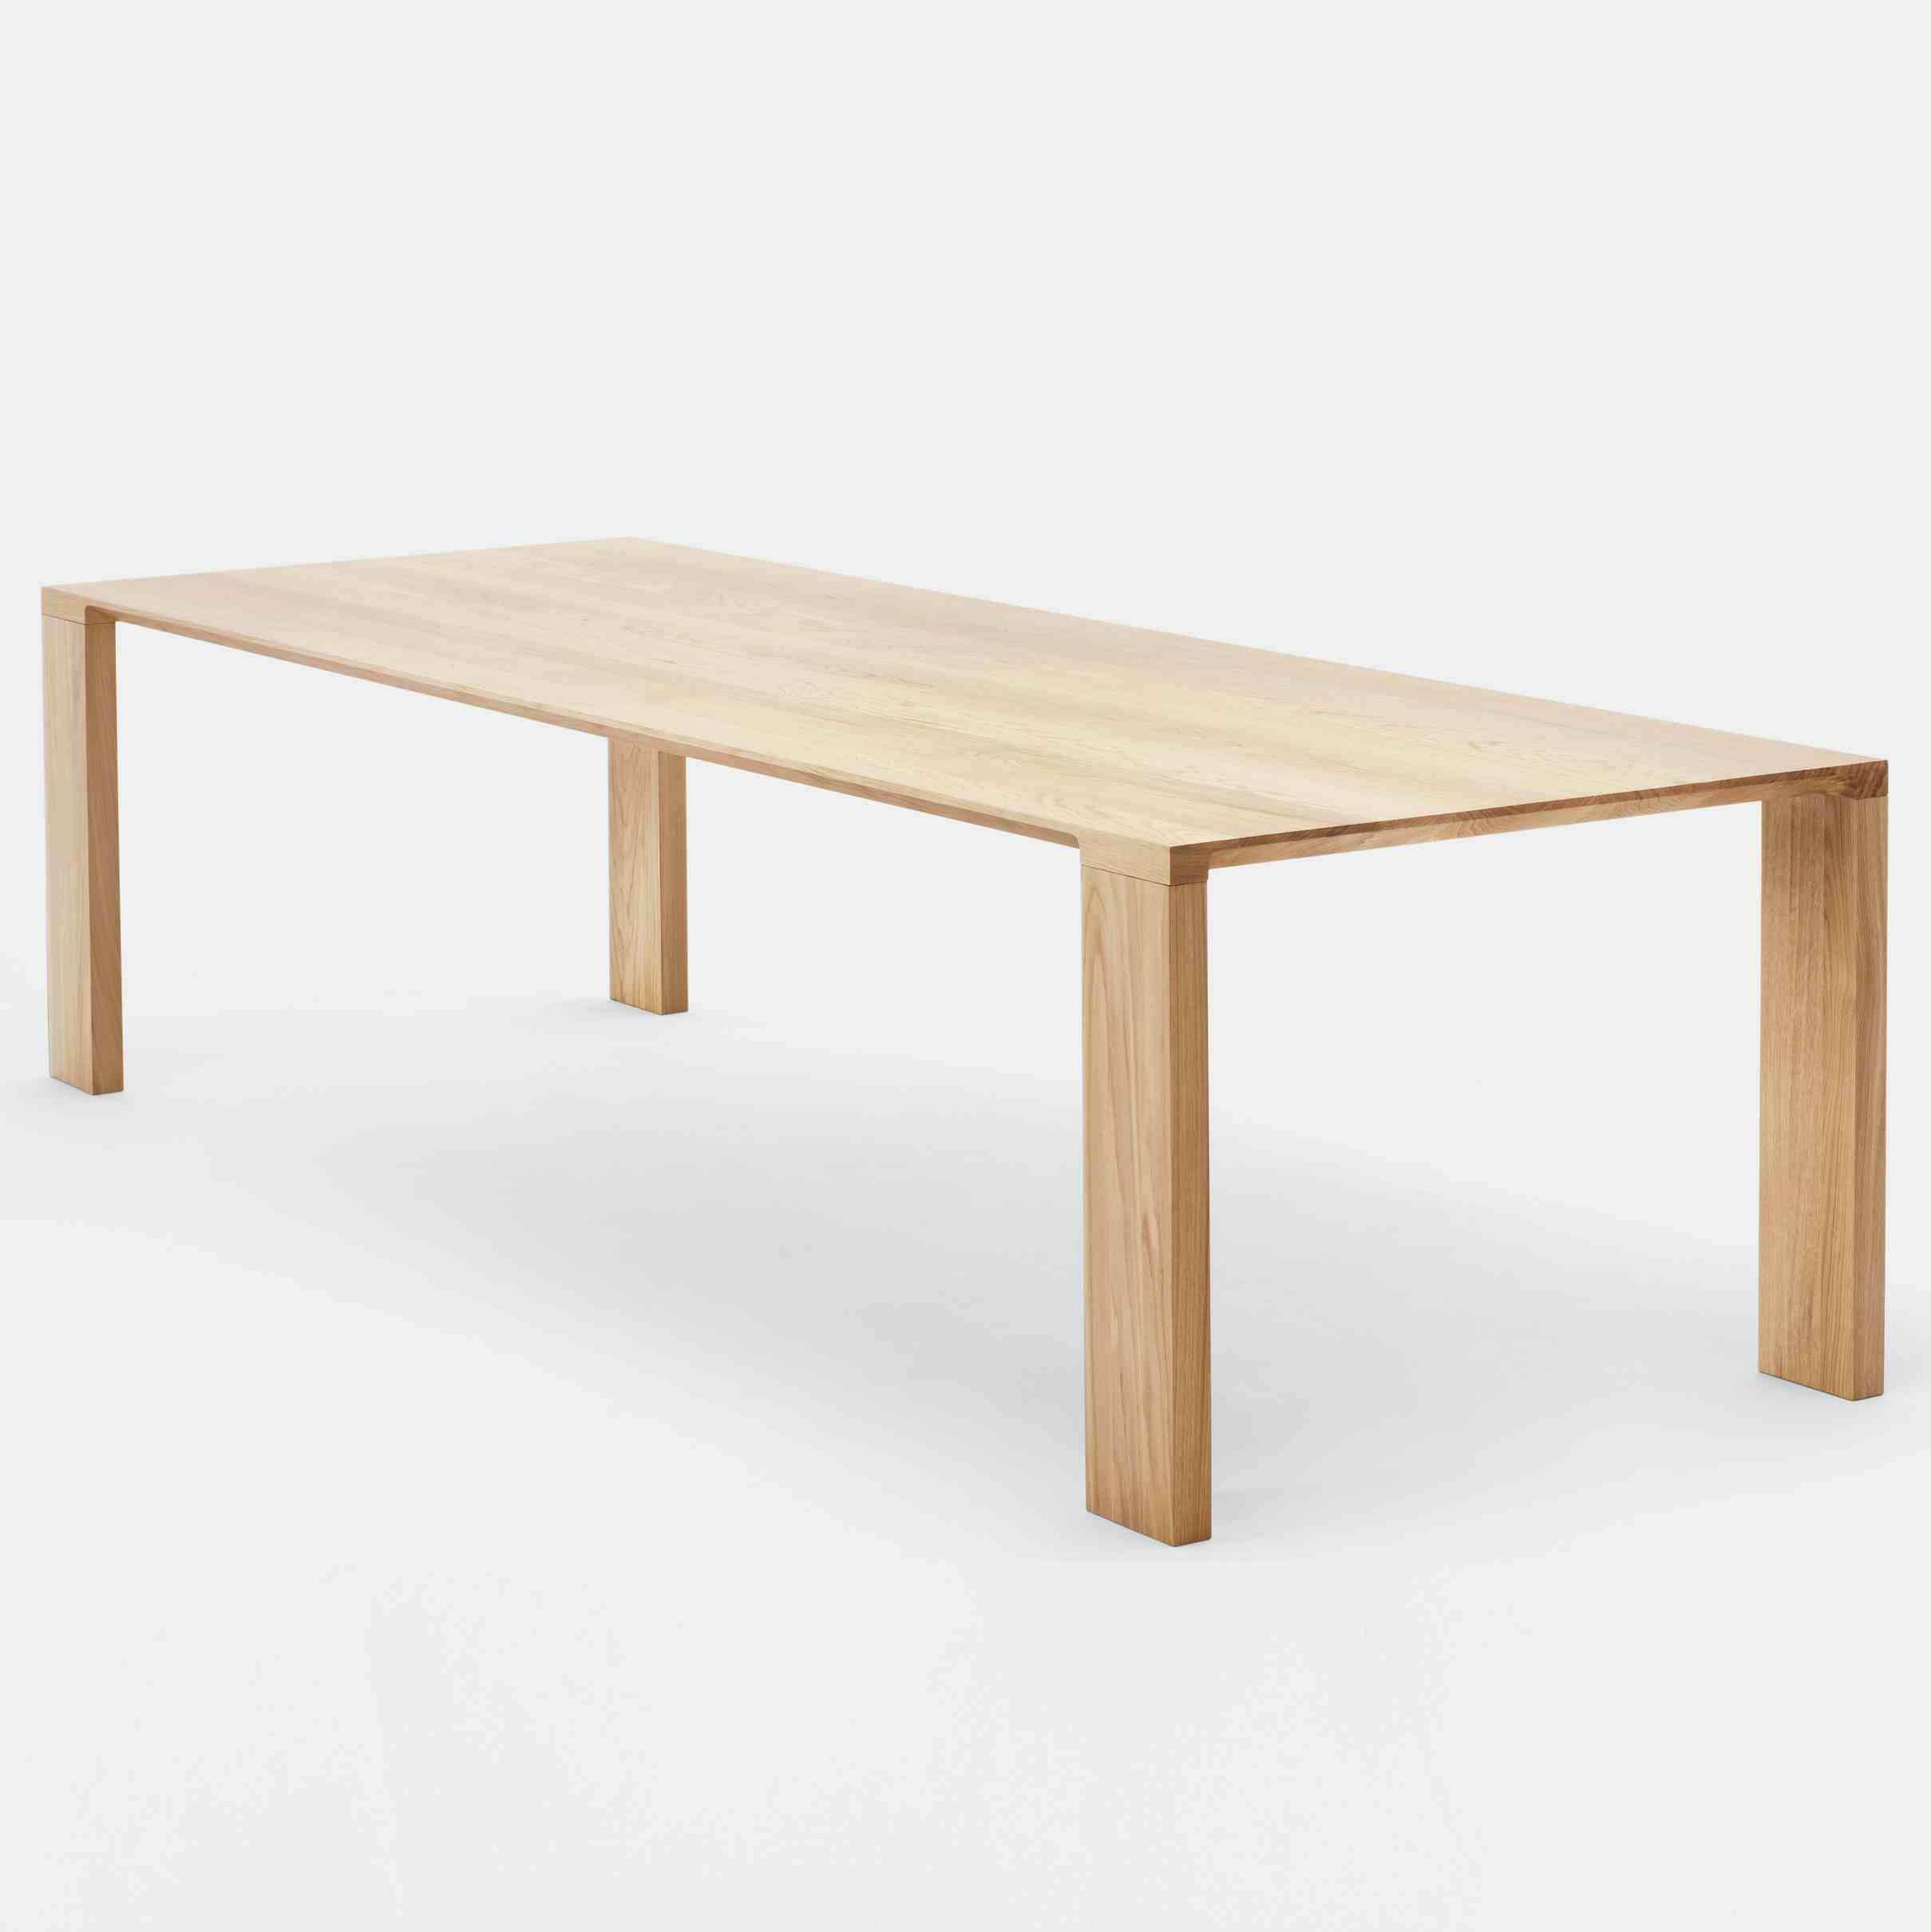 Bensen furniture radii table thumbnail haute living